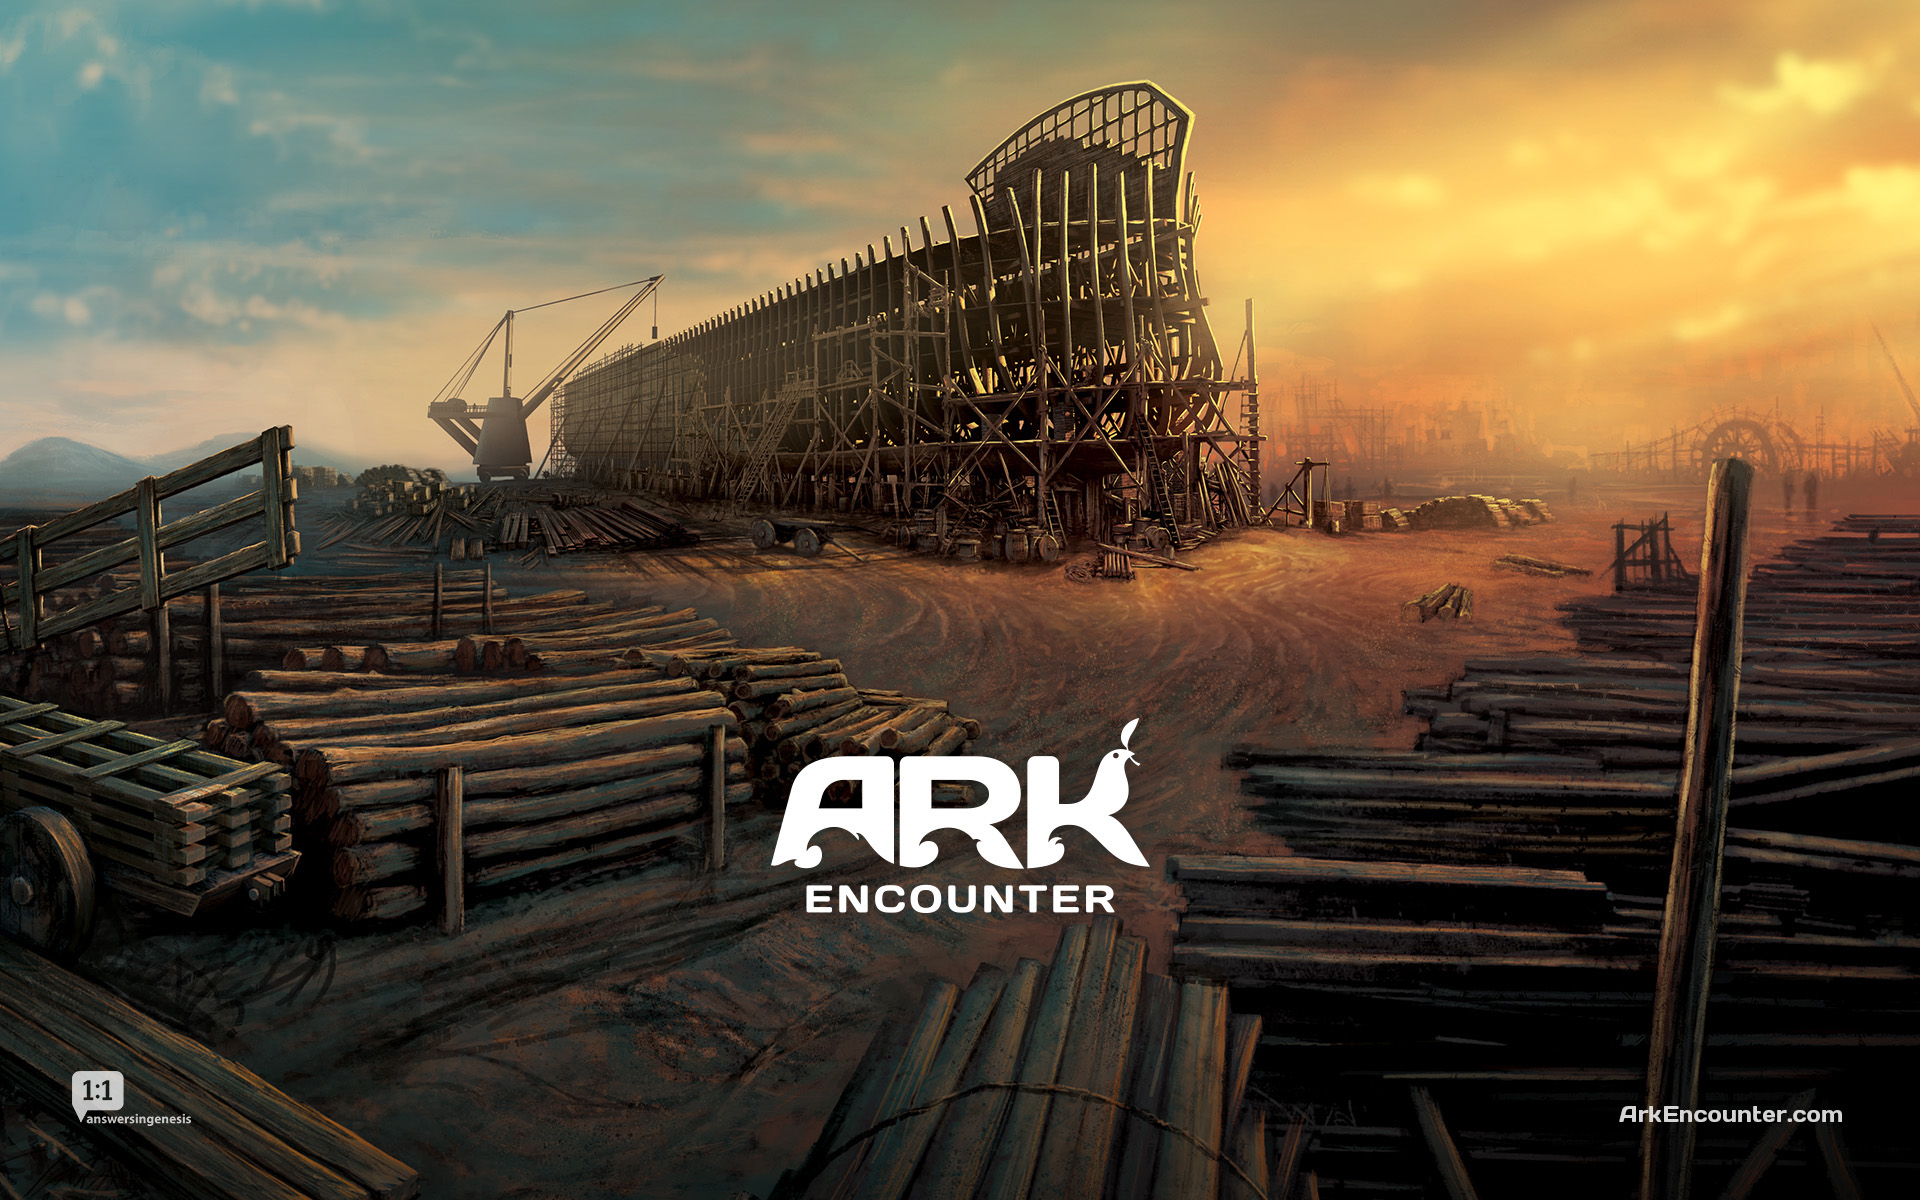 noahs ark encounter park kentucky